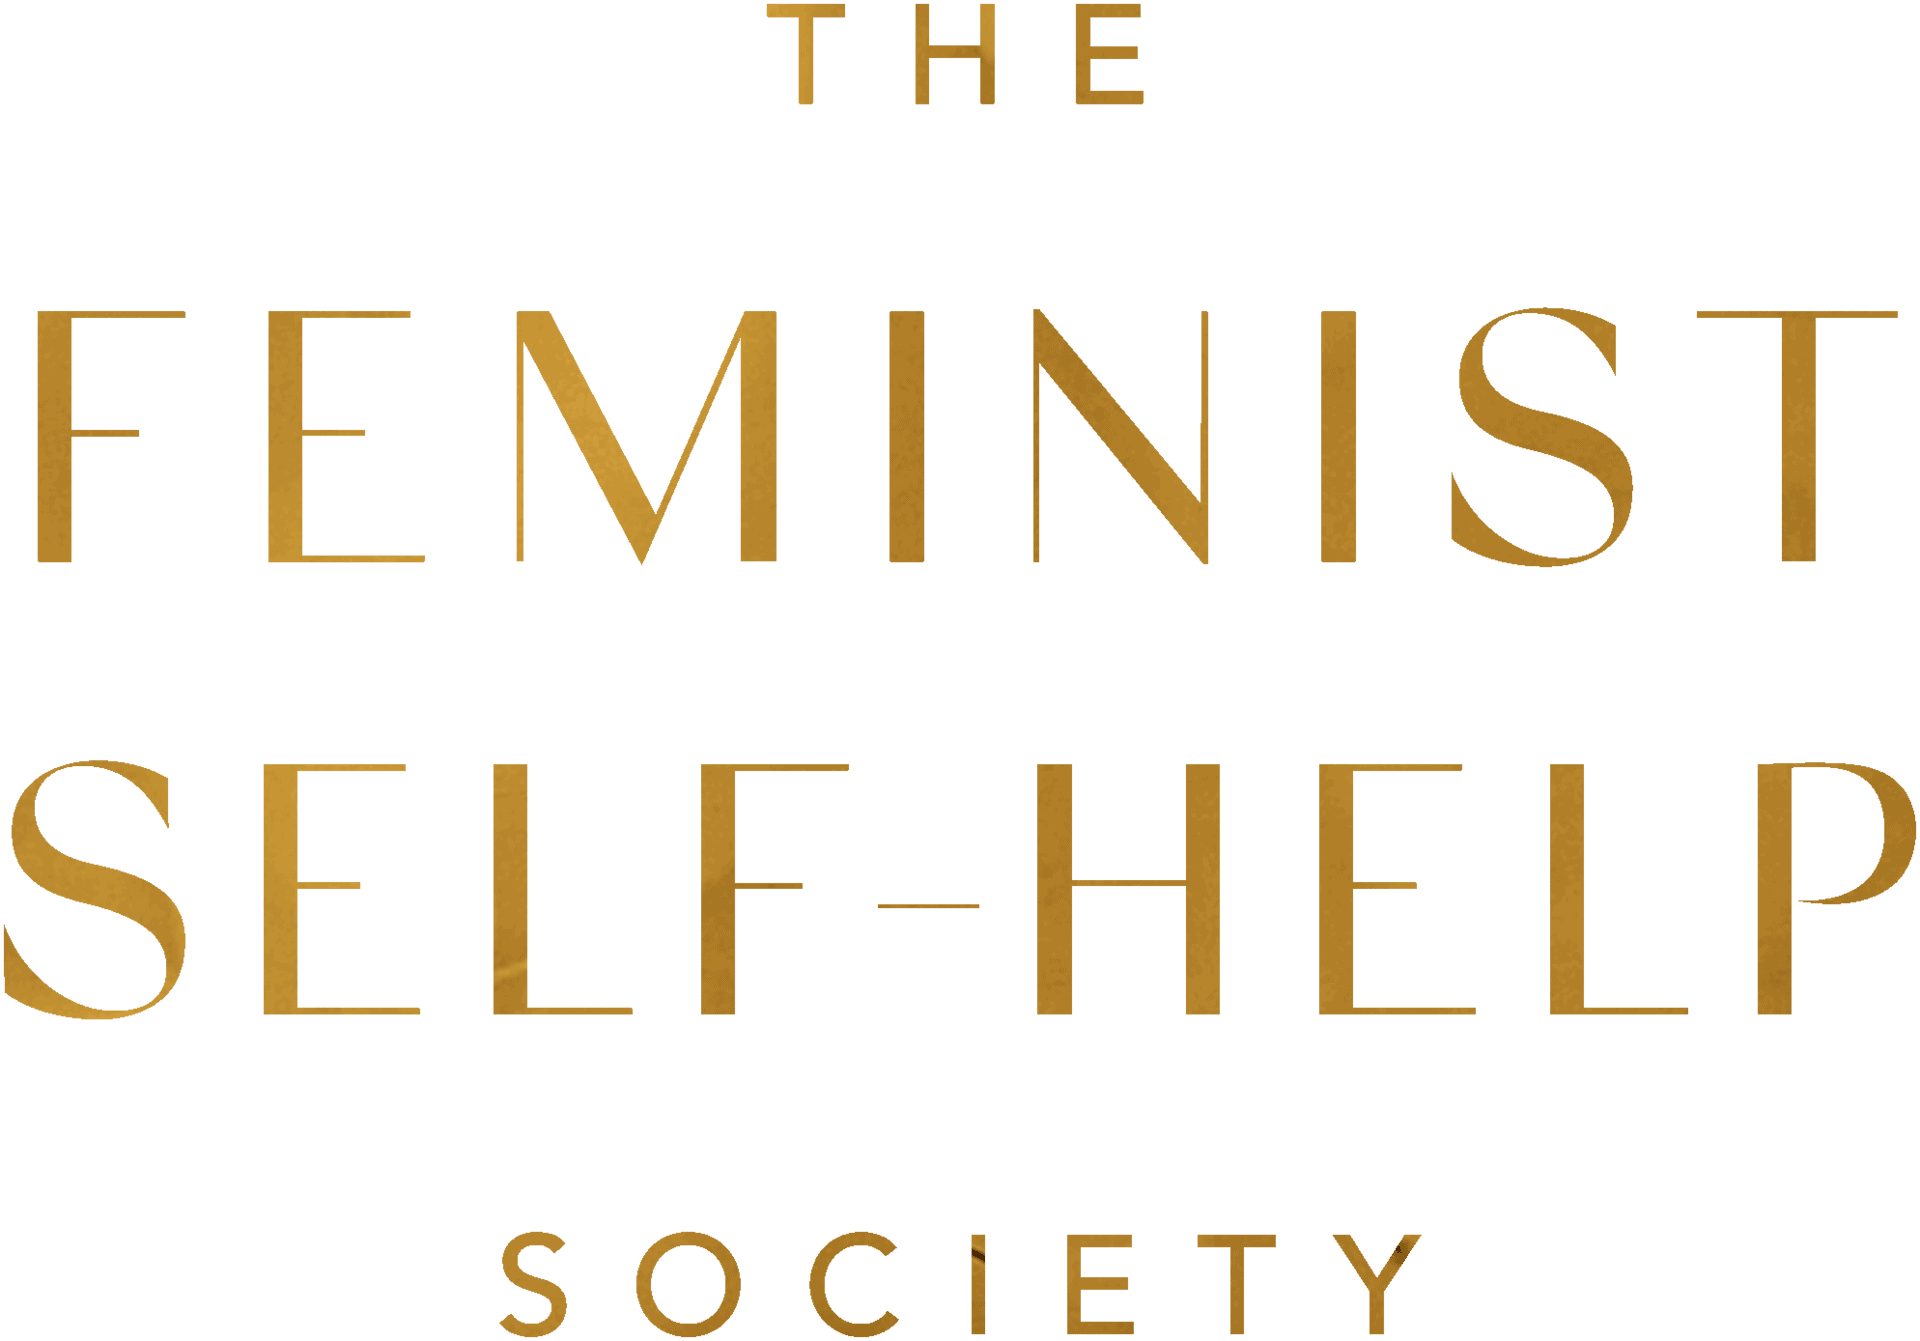 The Feminist Self-Help Society